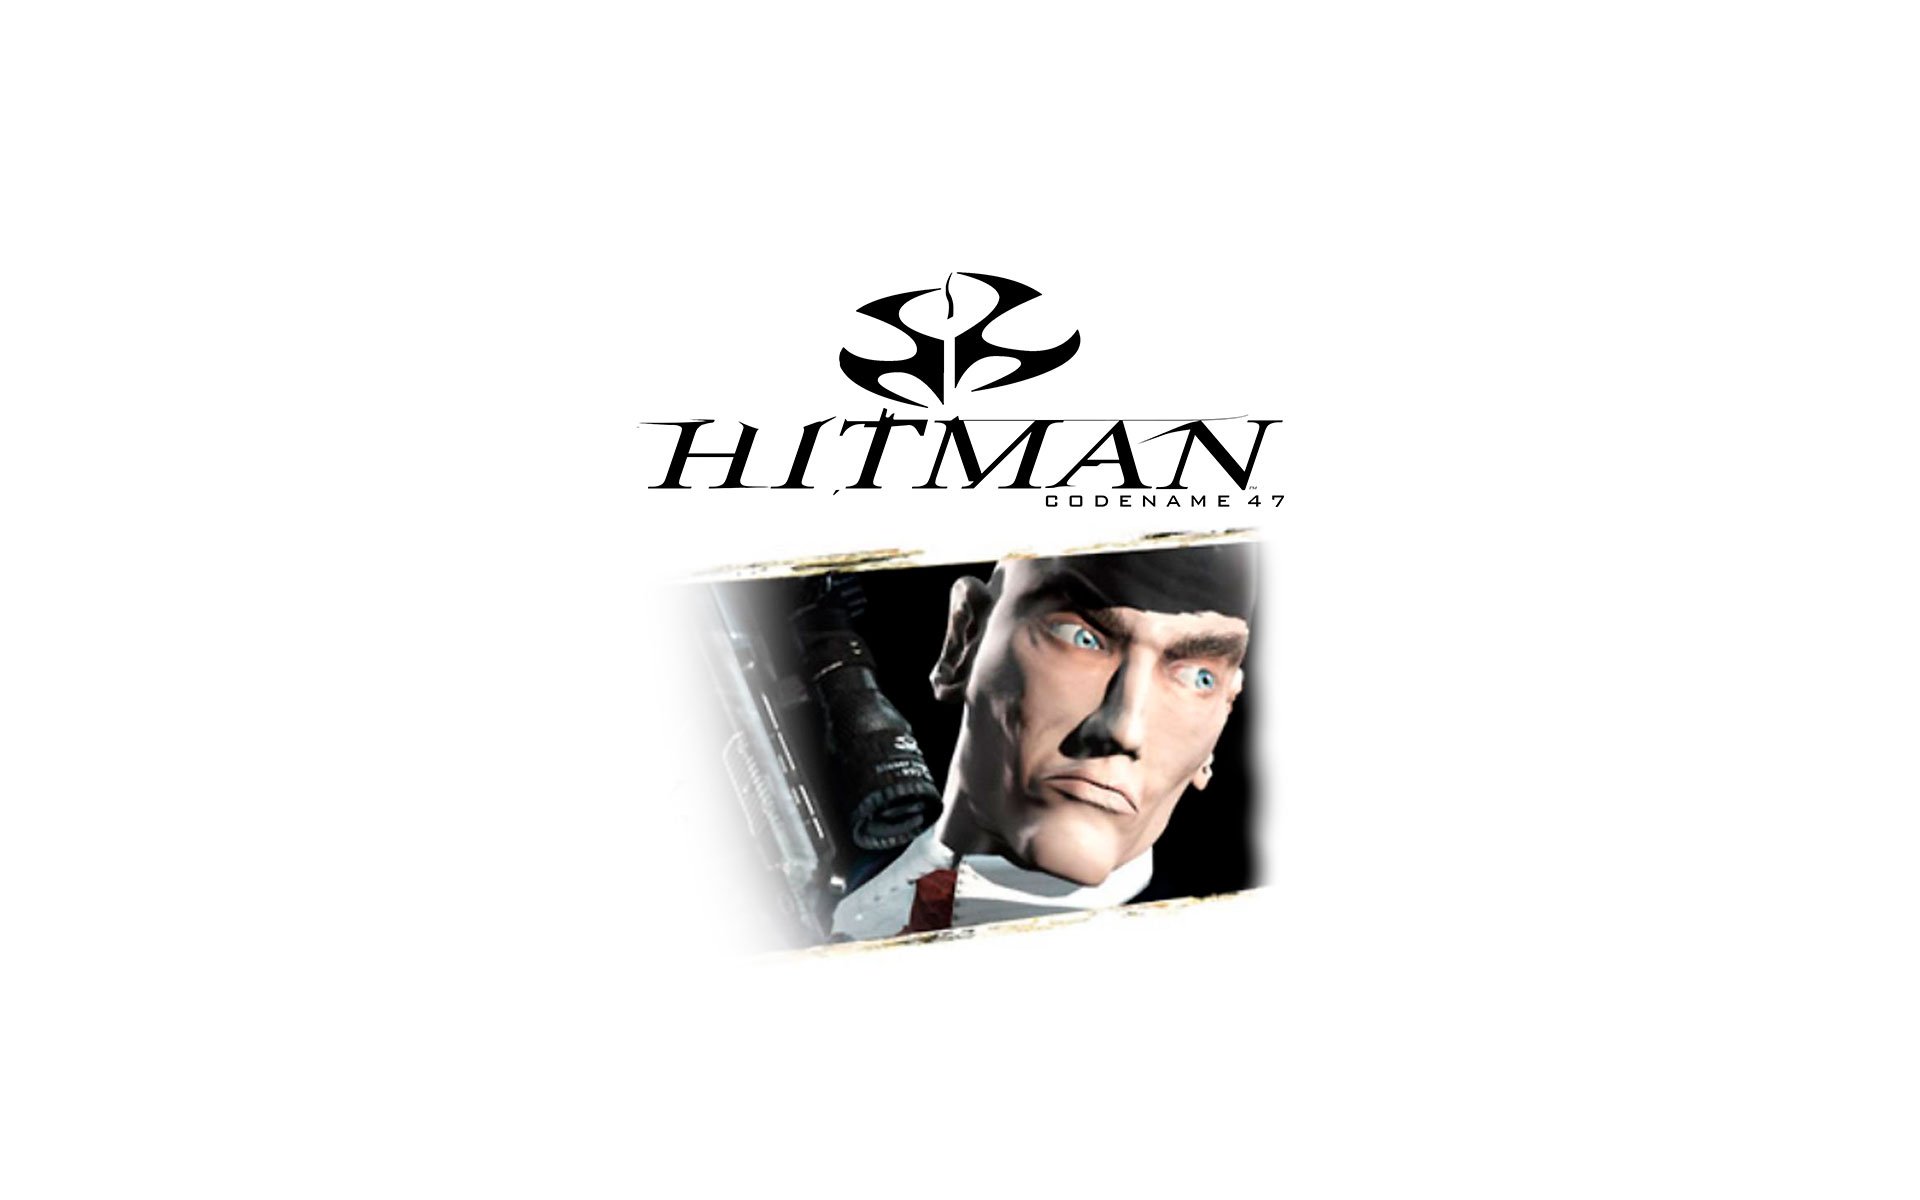 Hitman codename 47 patch tradução em português file - ModDB